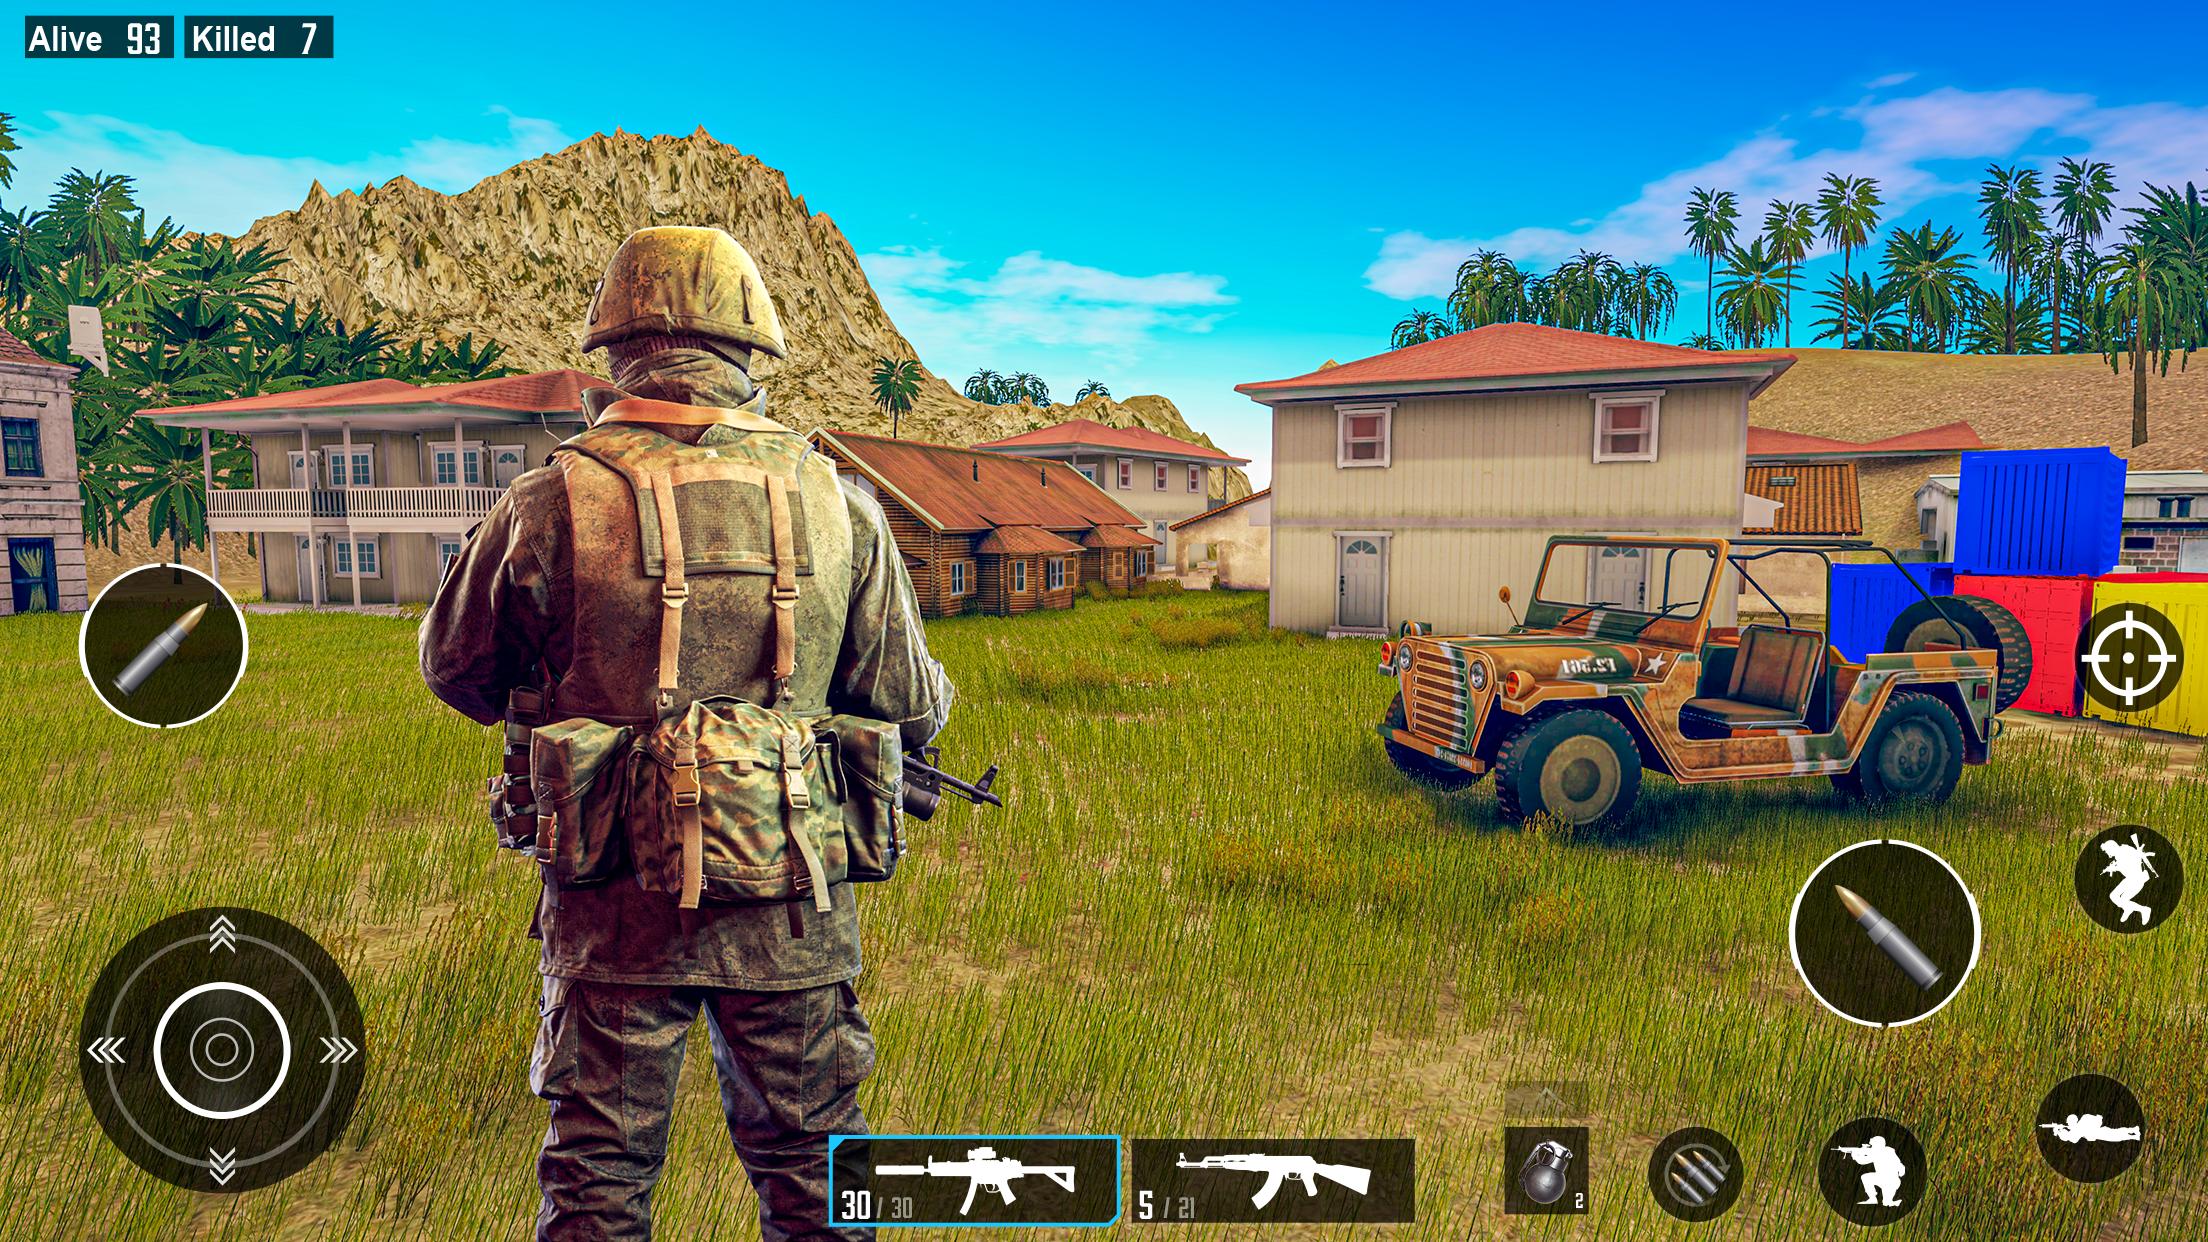 Real Commando Mission - Free Shooting Games 2020 3.5 Screenshot 11